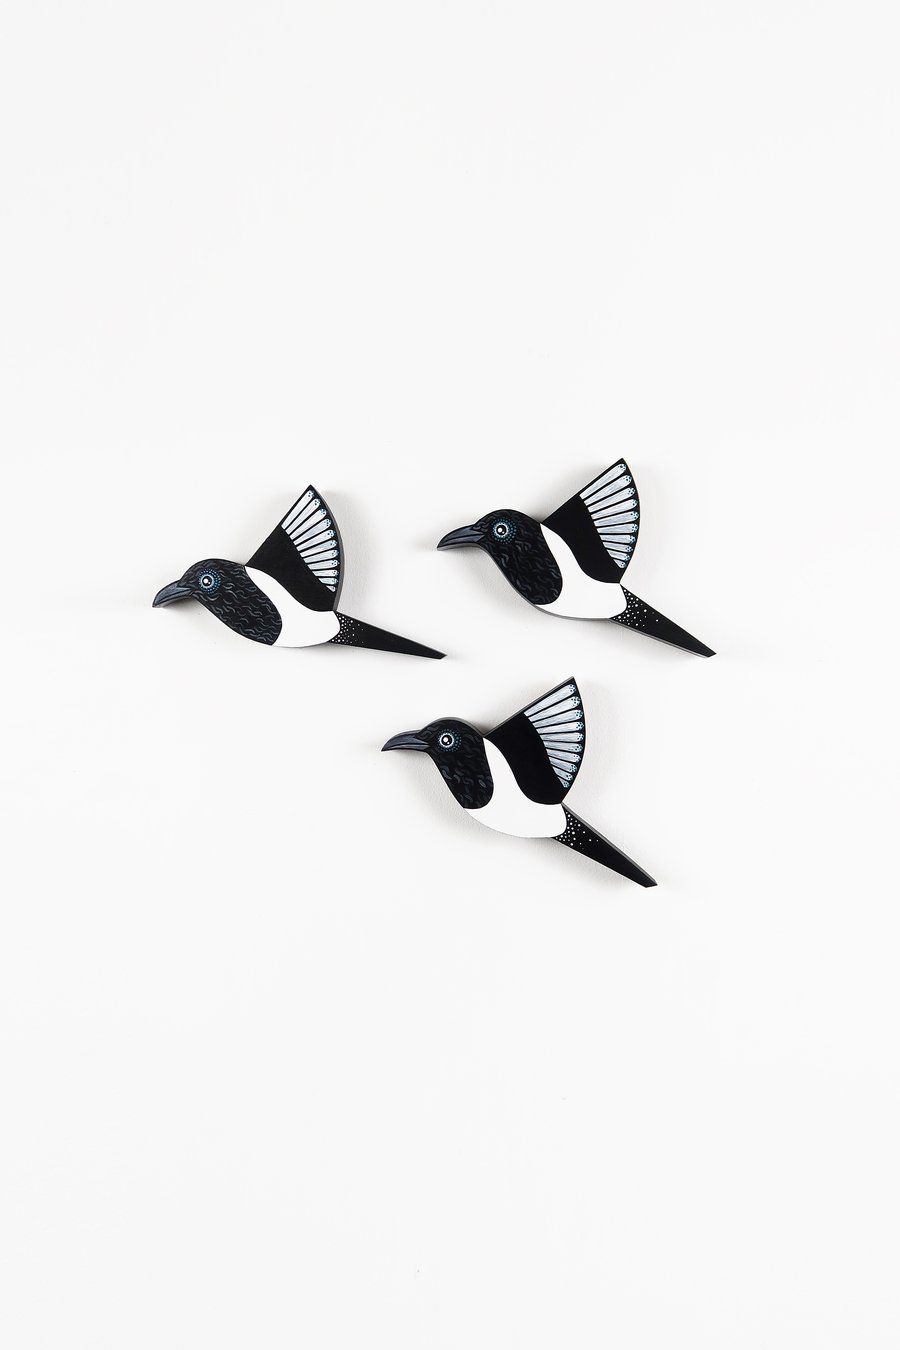 Magpie wall art, set of 3 birds, British bird wall hangings, bird lover gift.